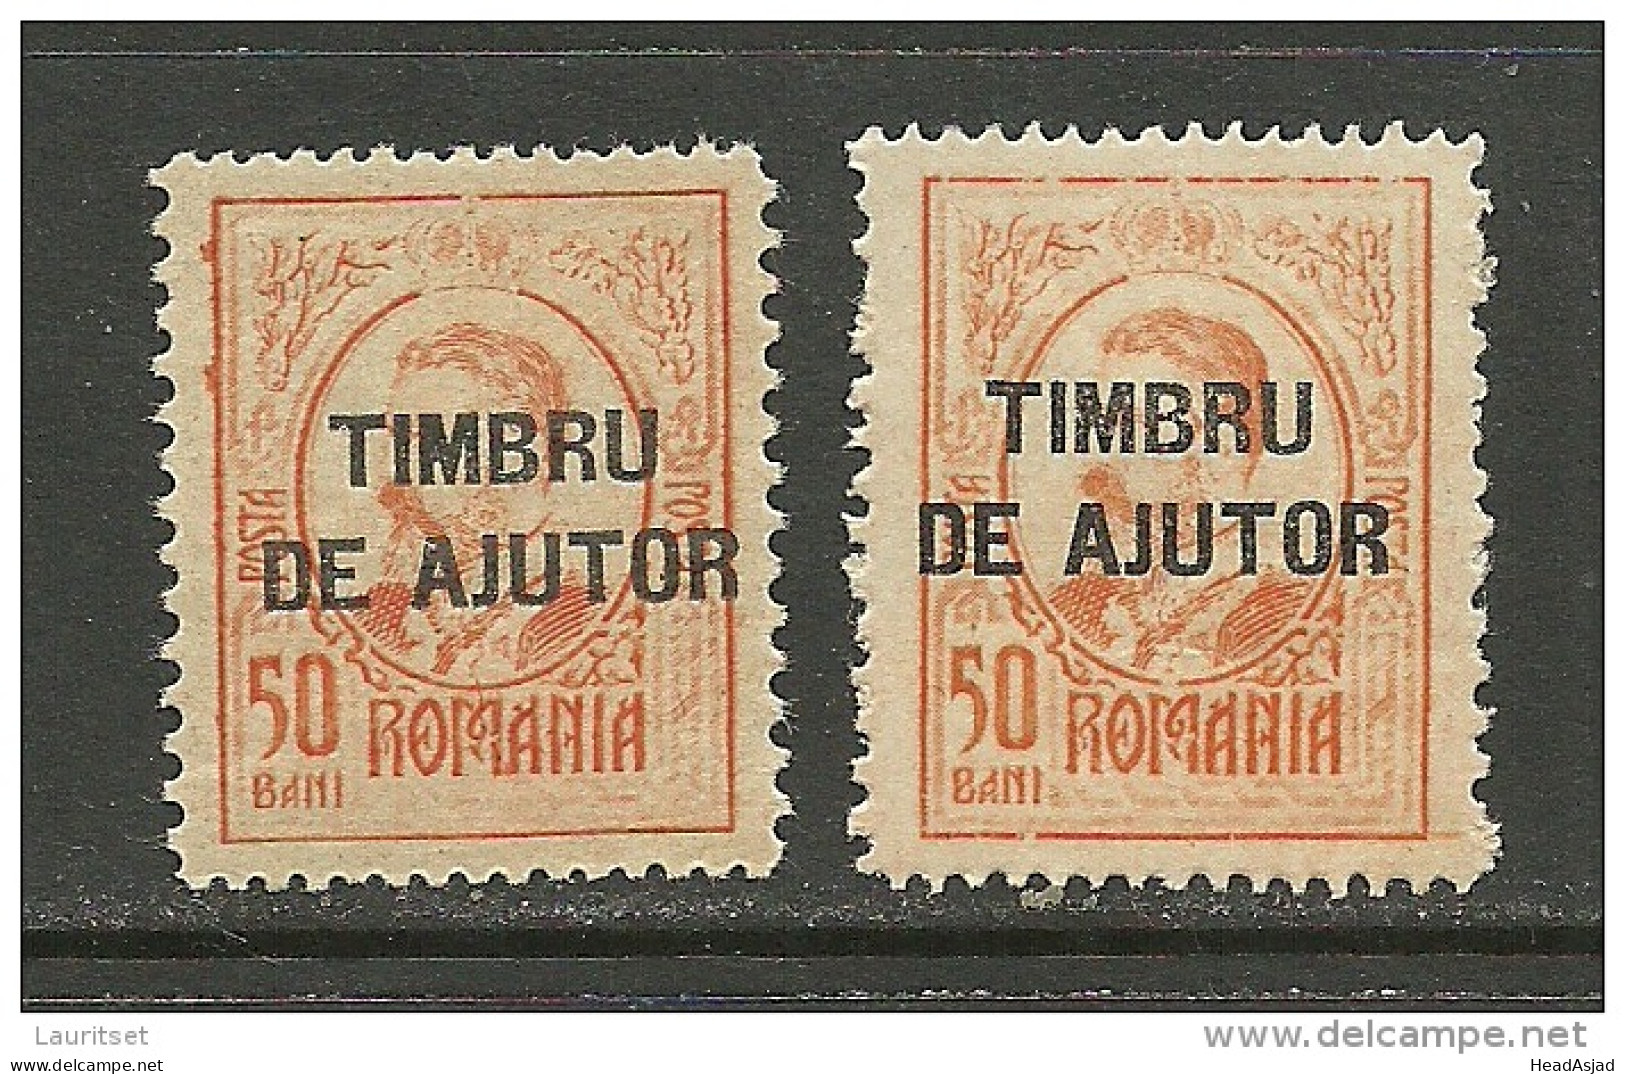 ROMANIA Rumänien 1915 Revenue Stamps Steuermarken 50 Bani, 2 Exemplares * - Revenue Stamps